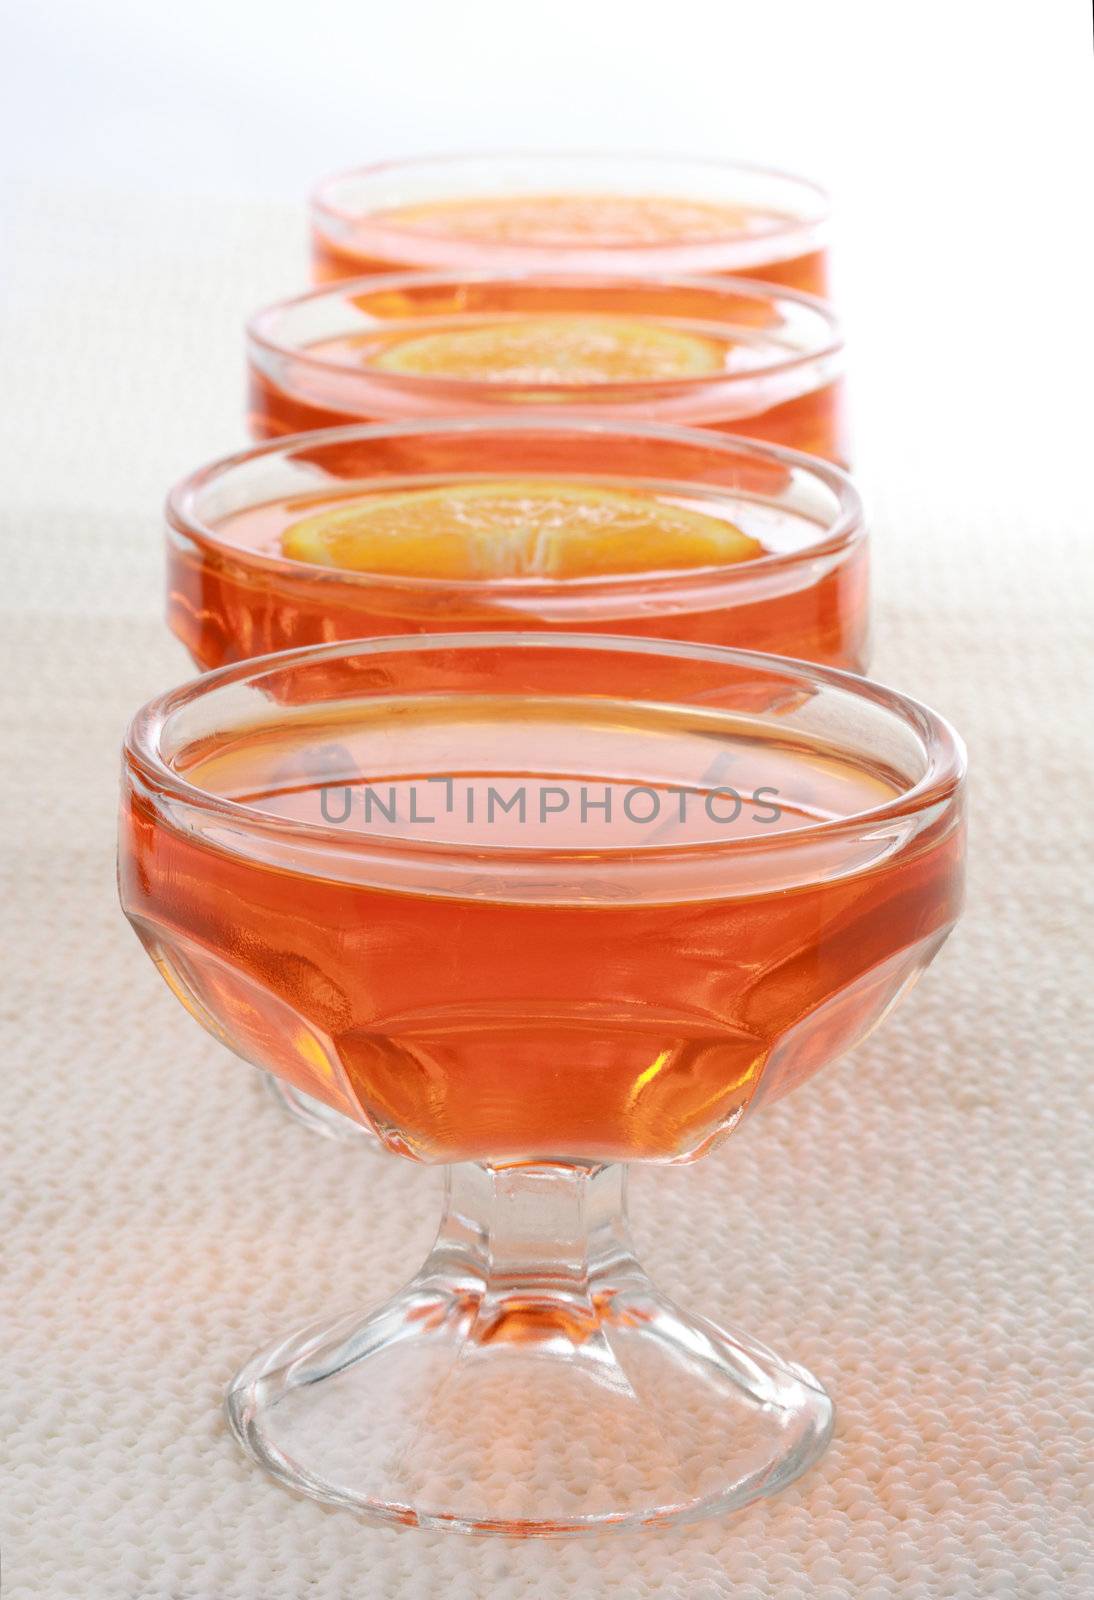 orange jelly dessert in a nice glass bowl